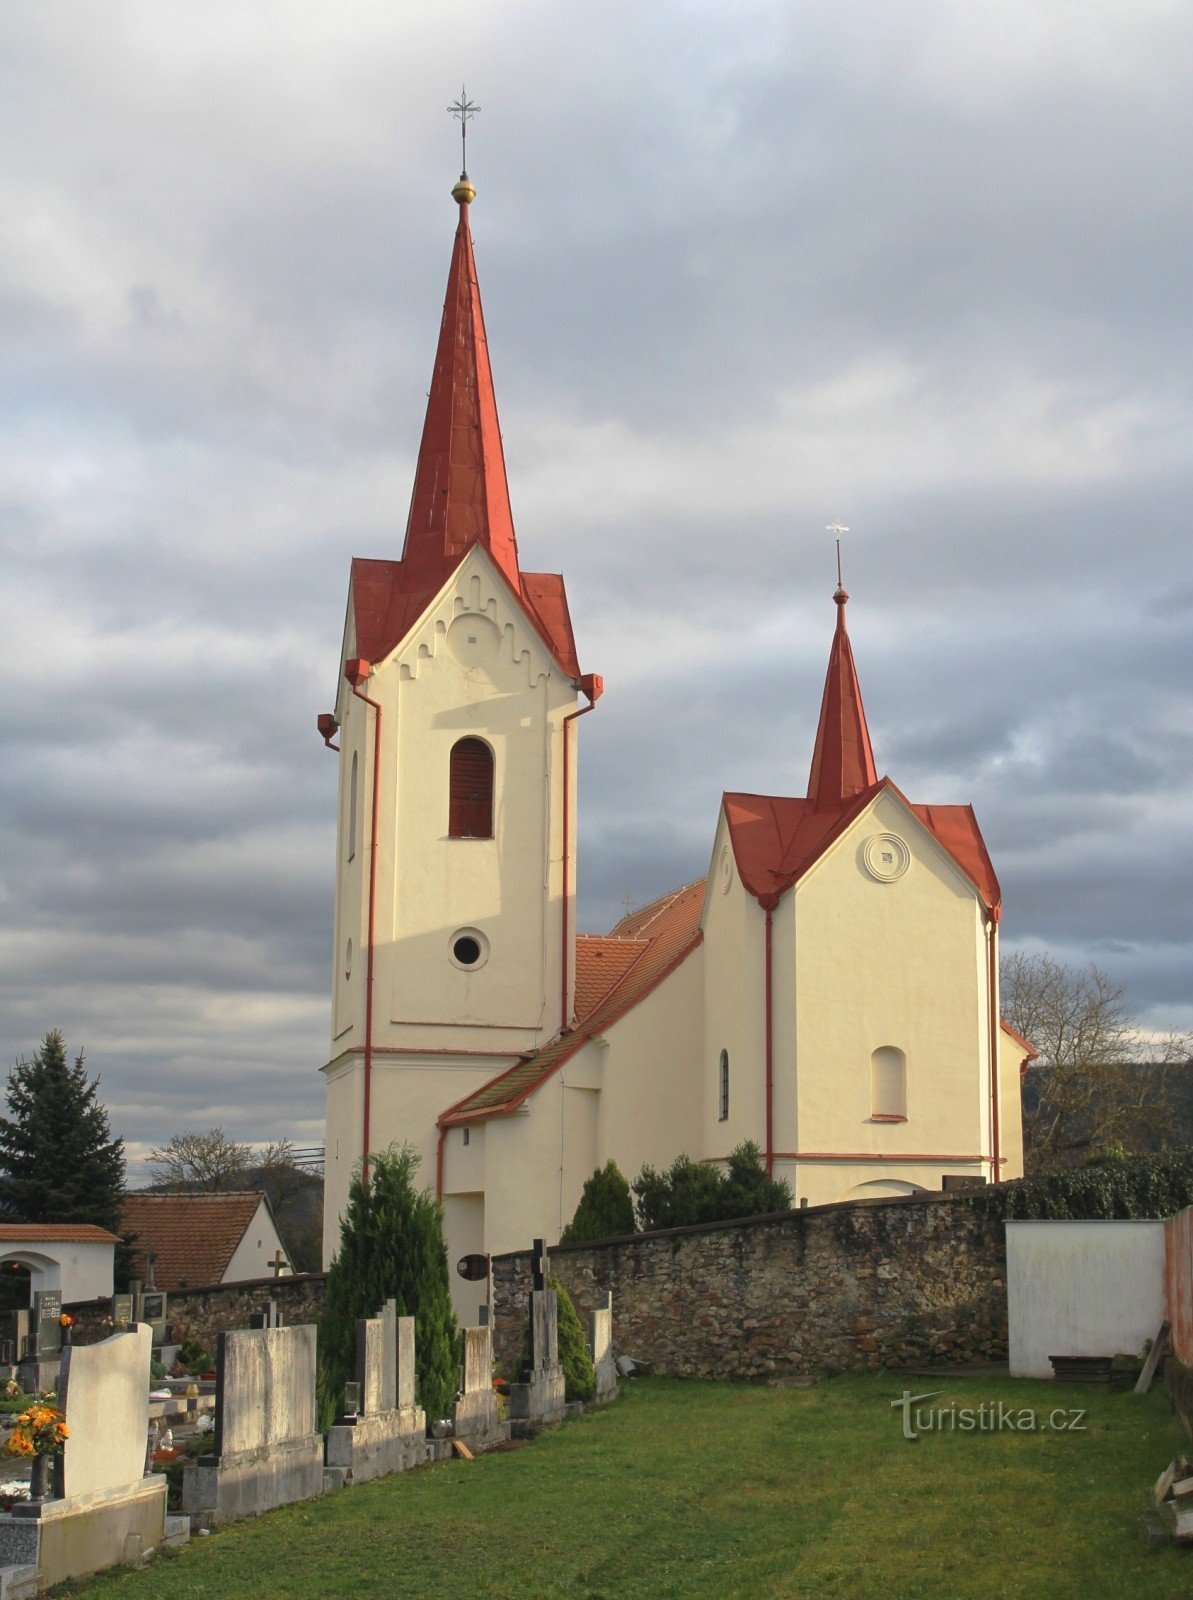 Újezd ​​lähellä Tišnovin kirkkoa. Lilja